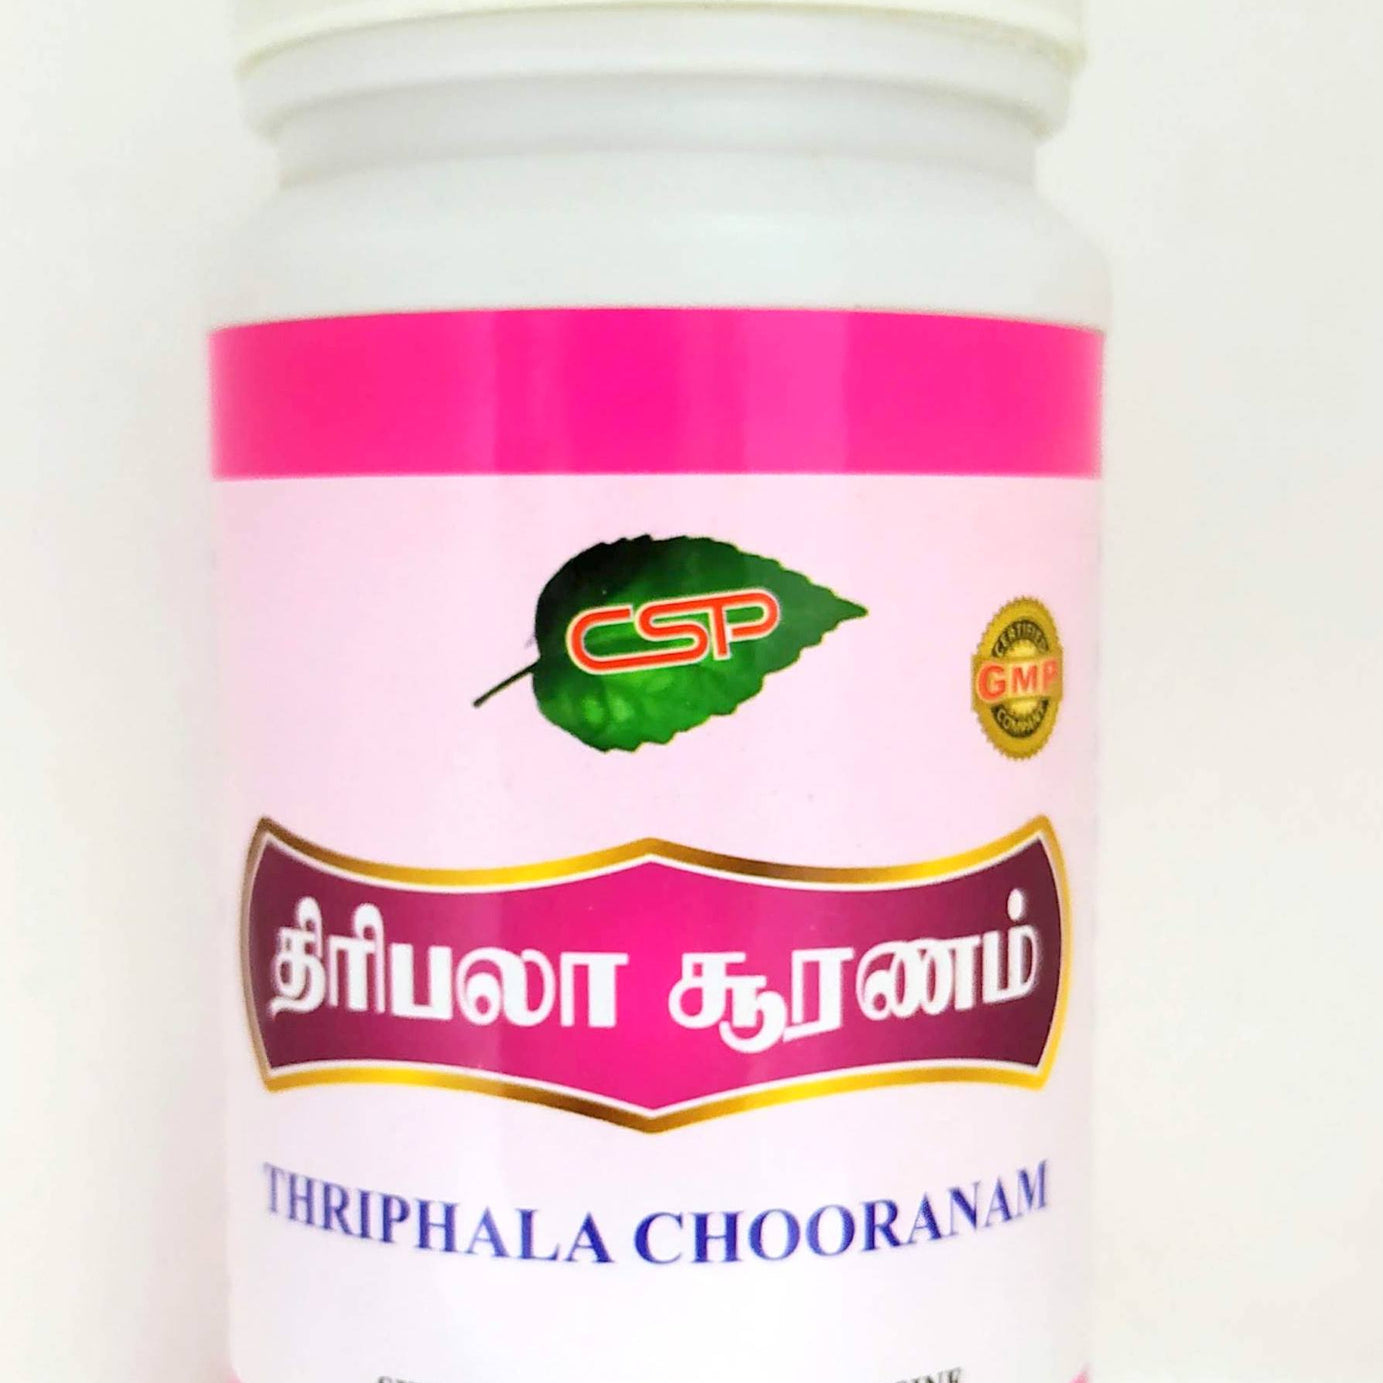 Shop Thiripala Chooranam 100gm at price 55.00 from Crescent Online - Ayush Care